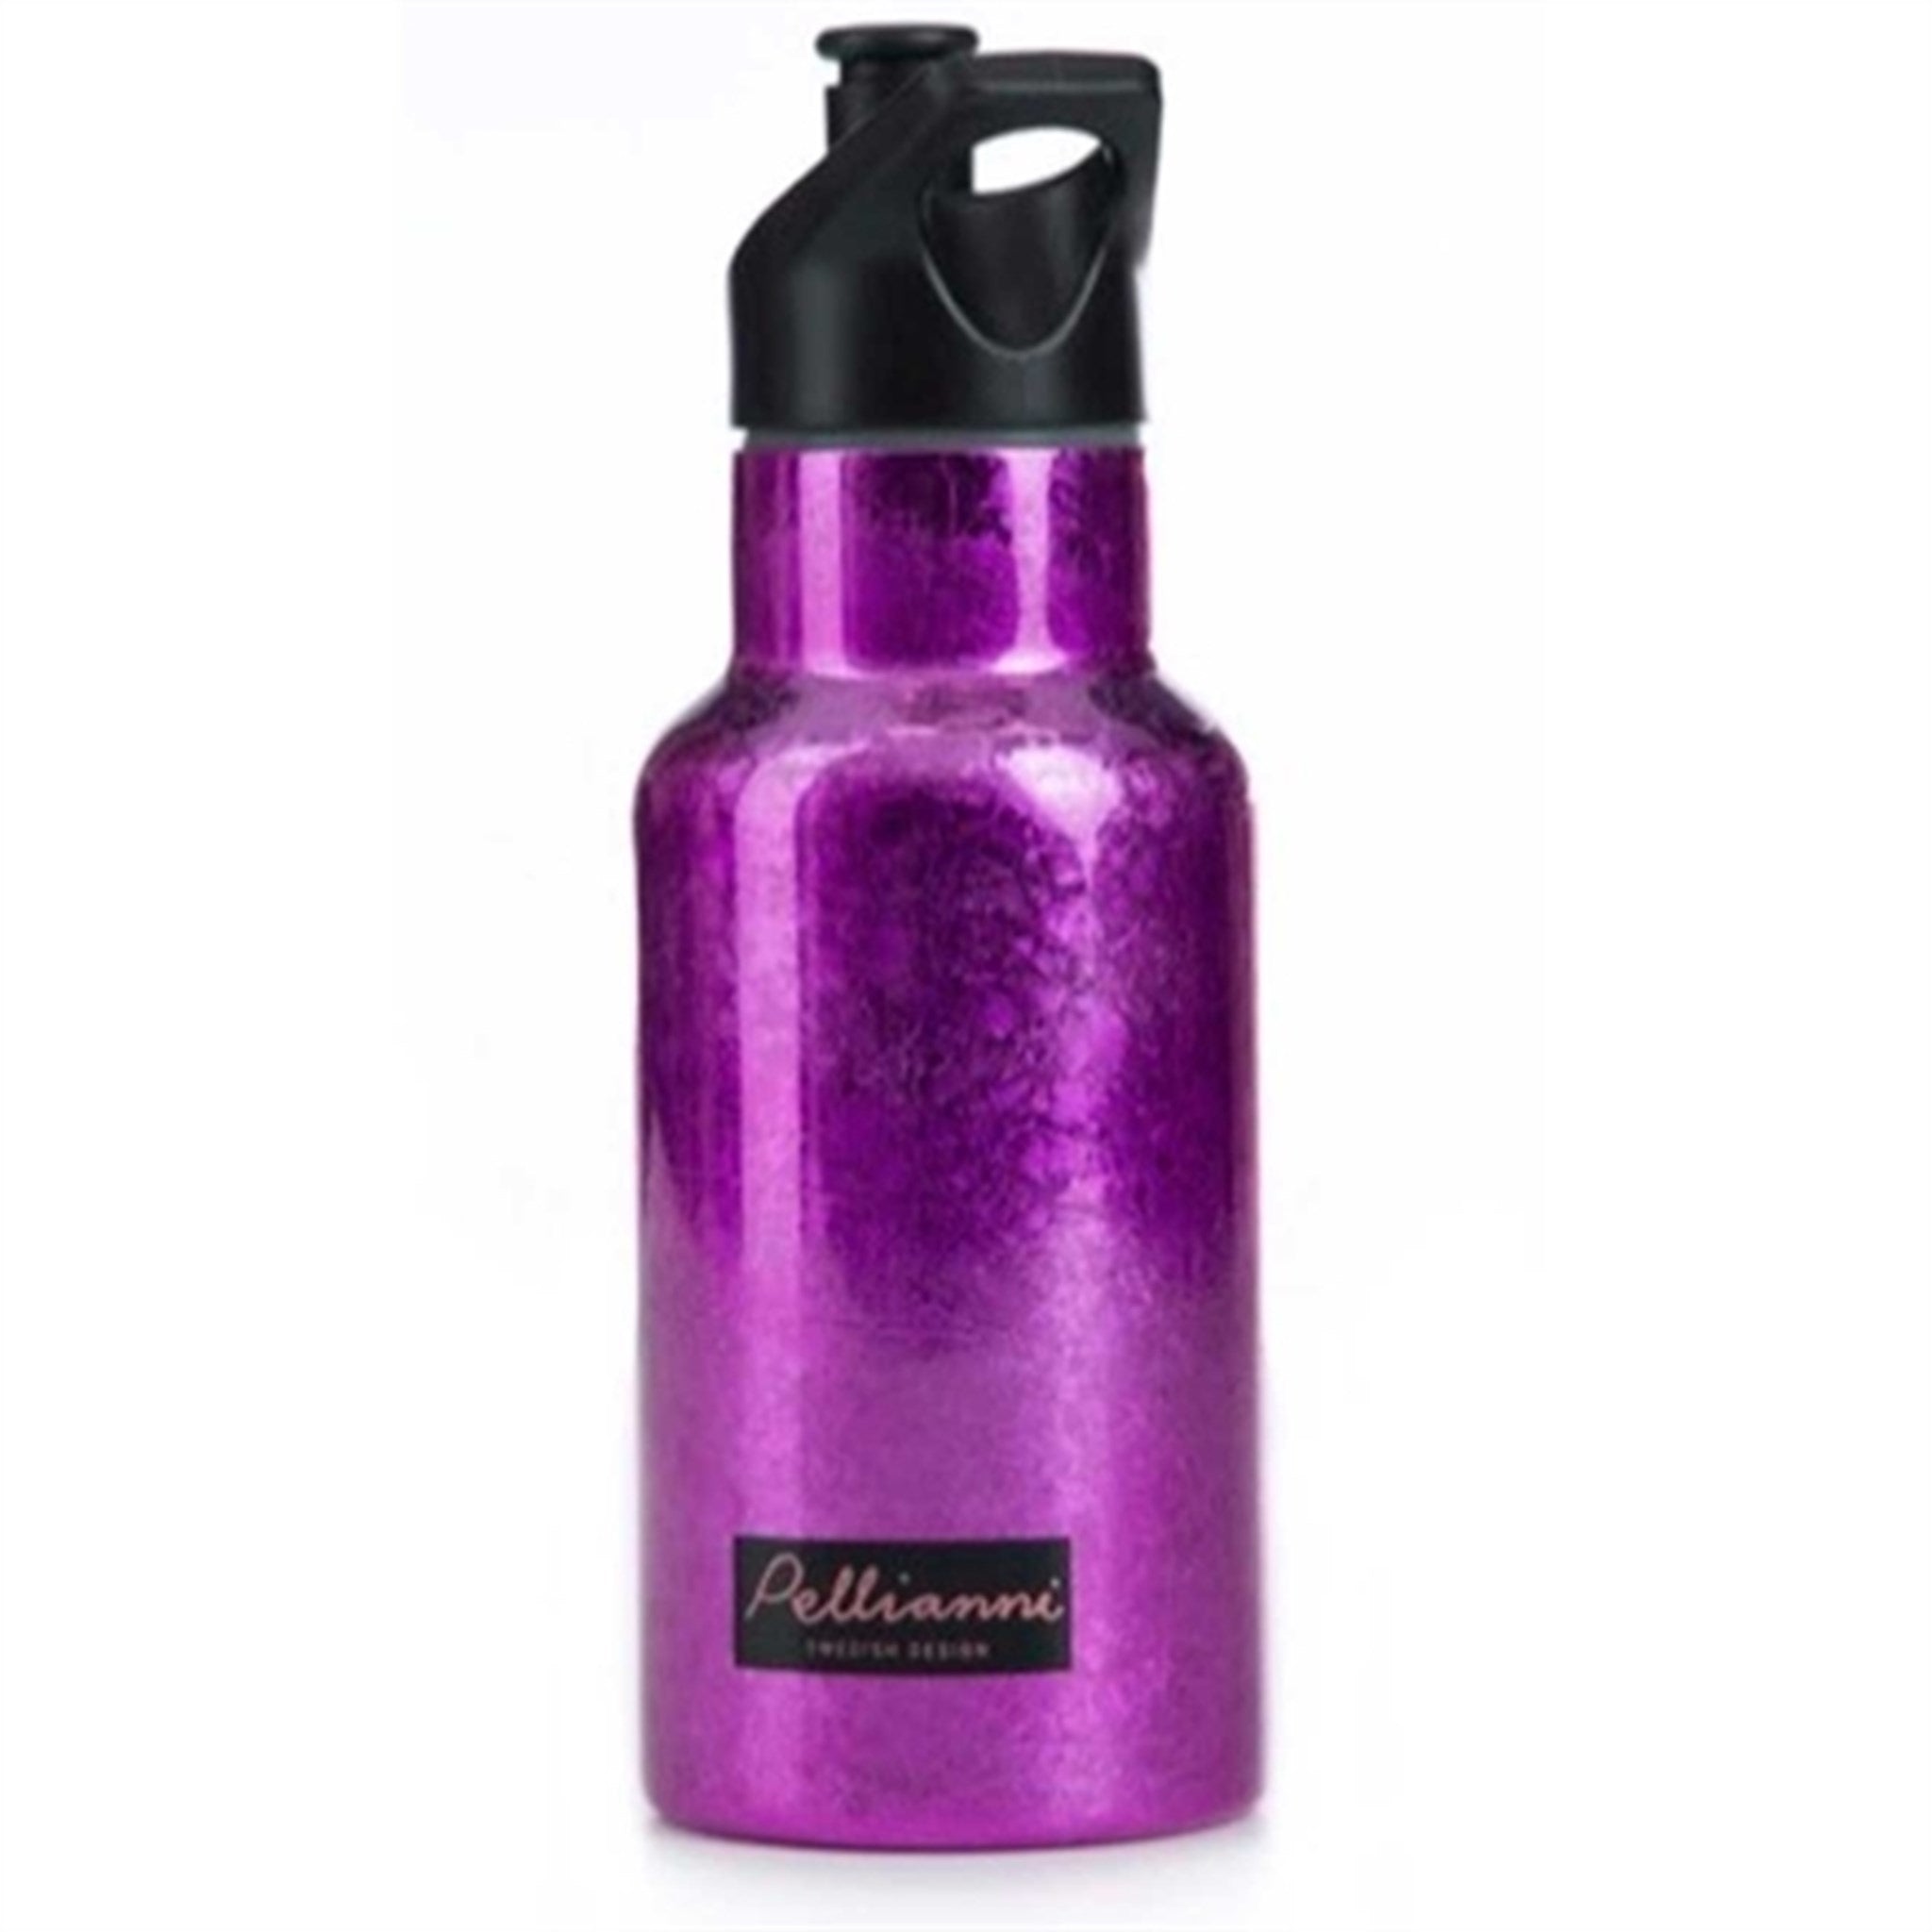 Pellianni Stainless Steel Bottle 350ml Lilac